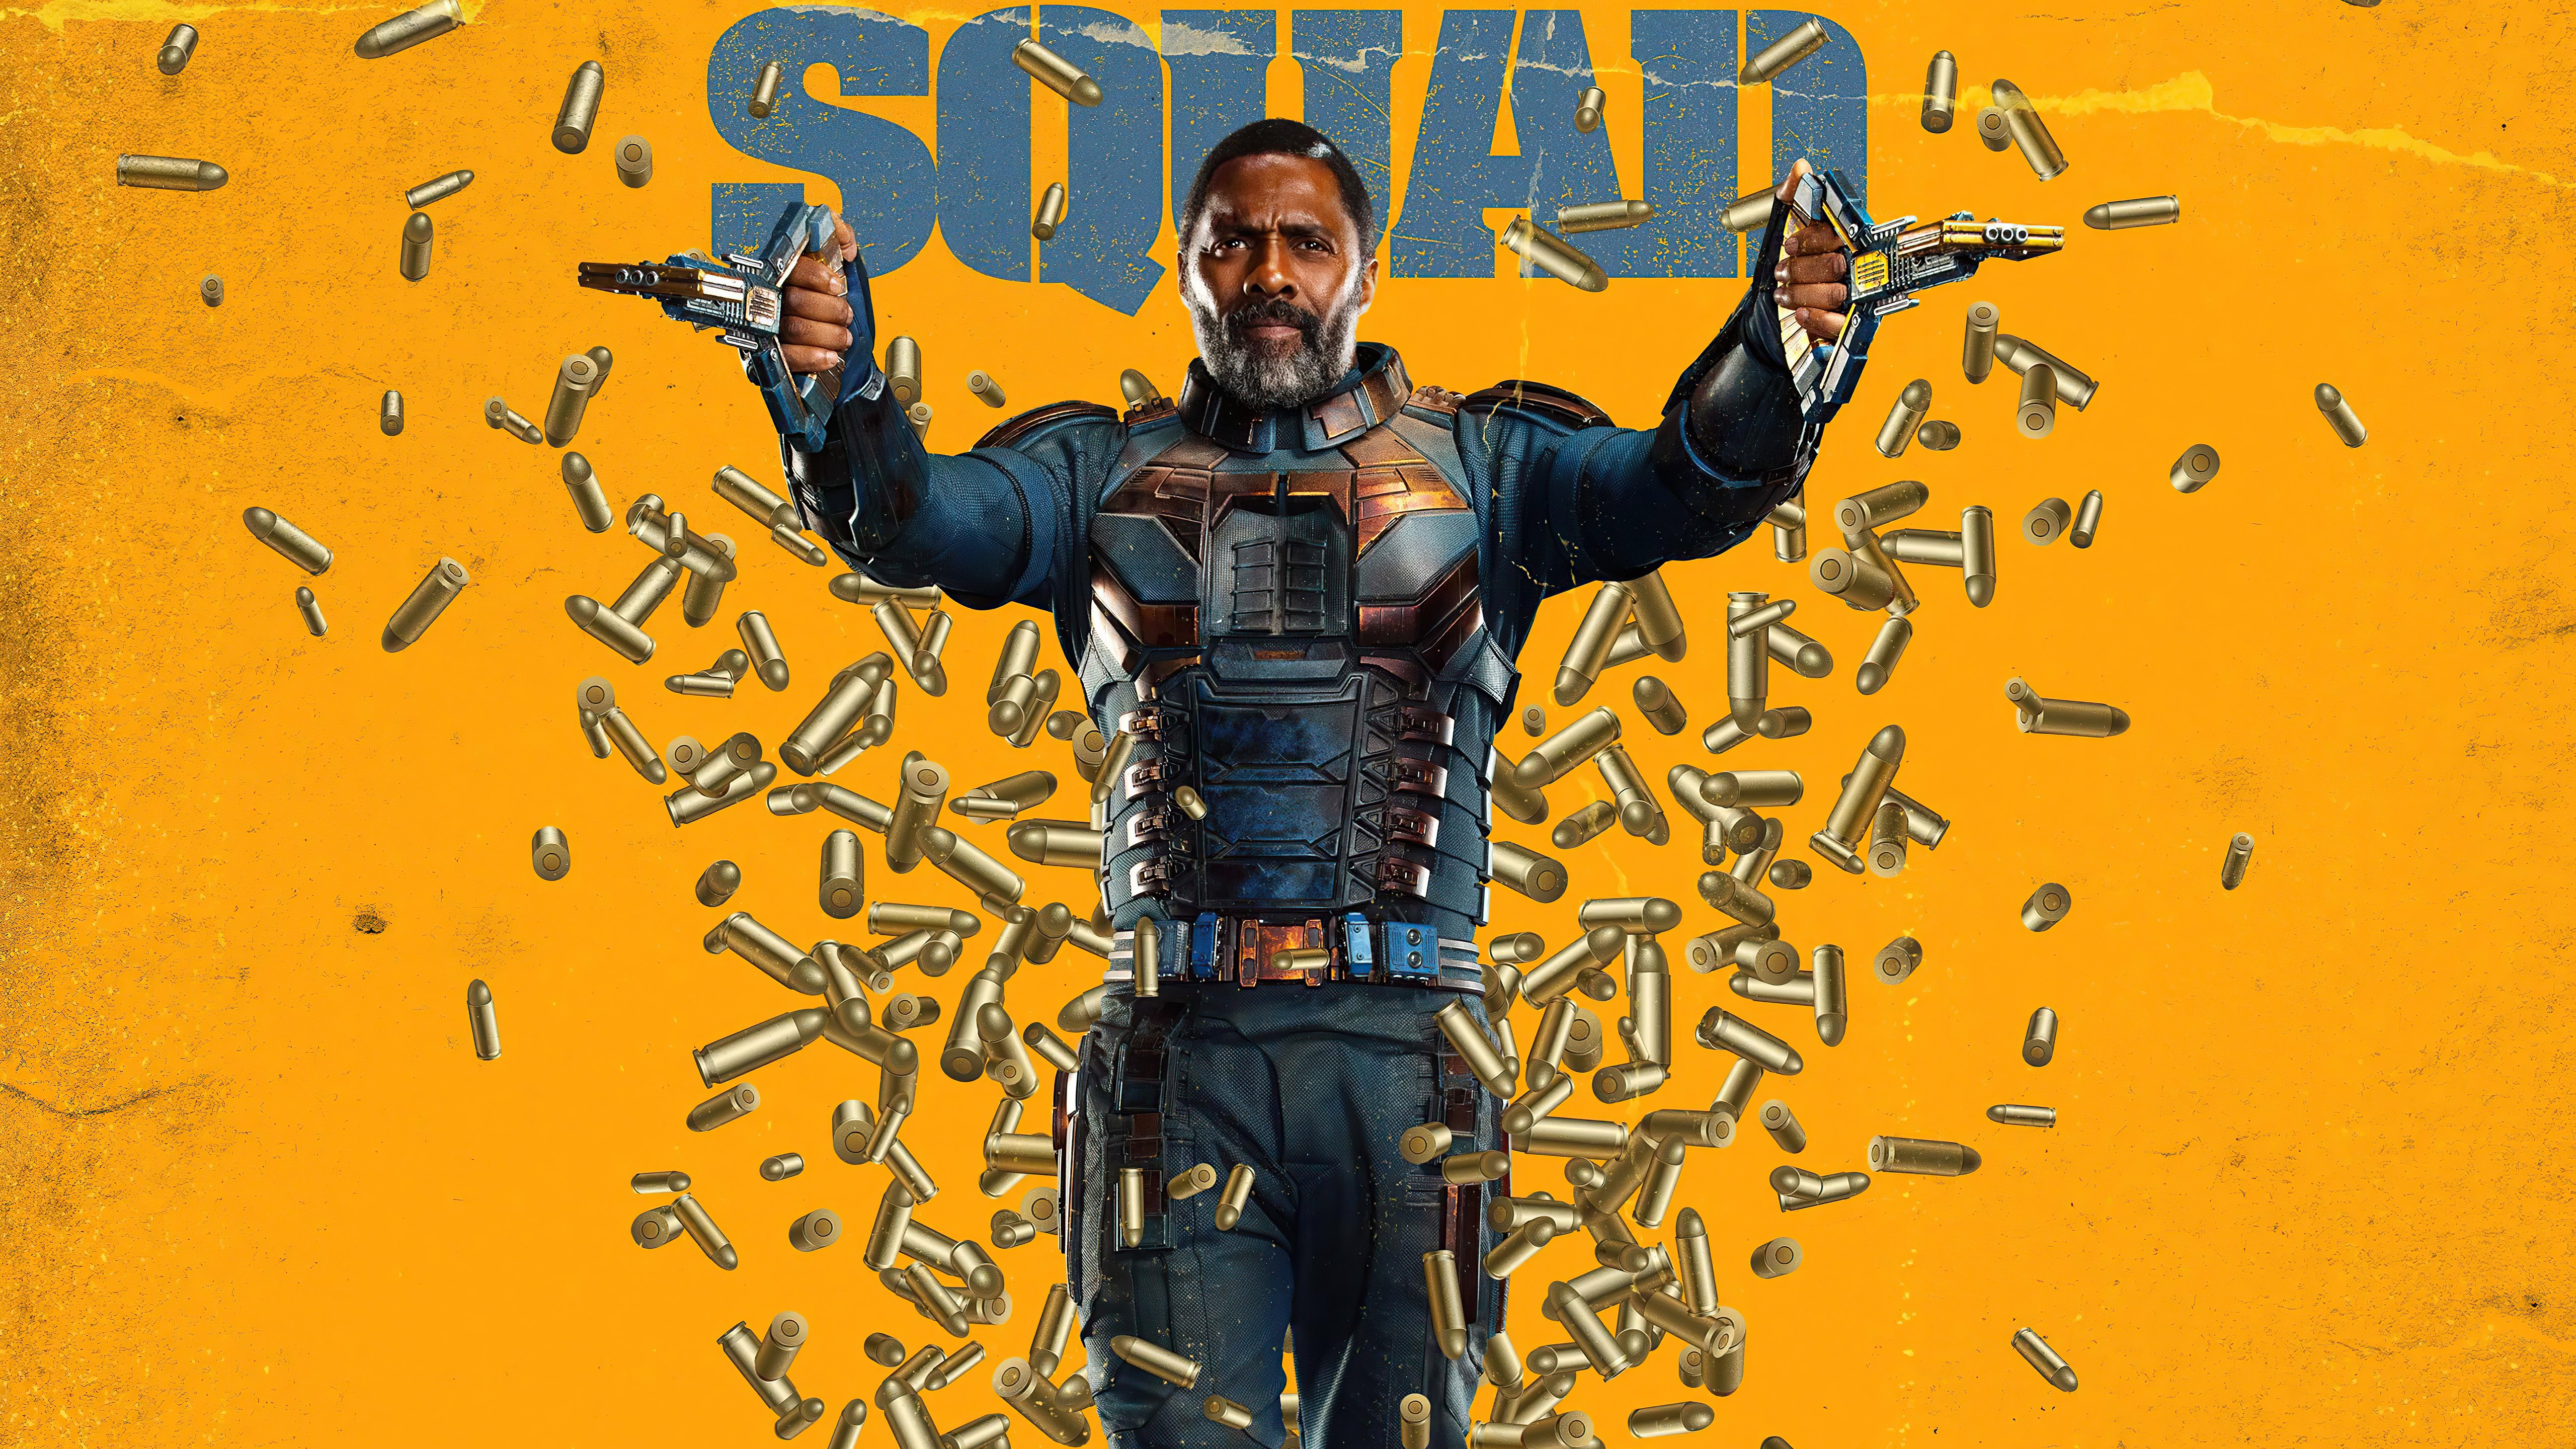 Legion samobojcow - The Suicide Squad (2021) 009 Idris Elba jako Bloodsport